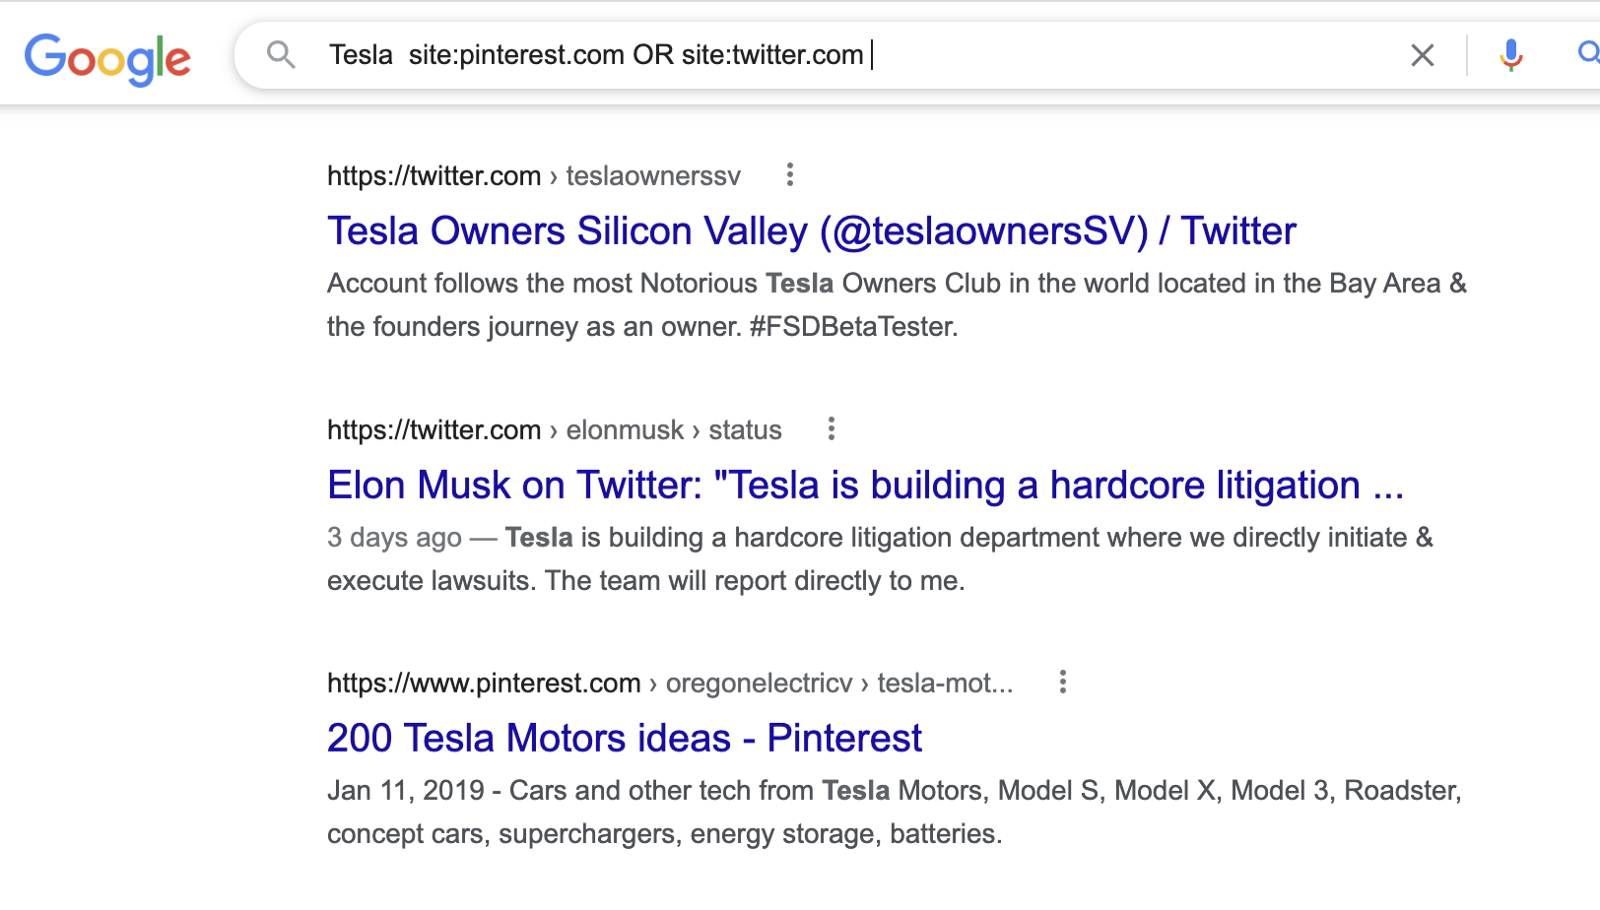 Tesla on pinterest.com and twitter.com